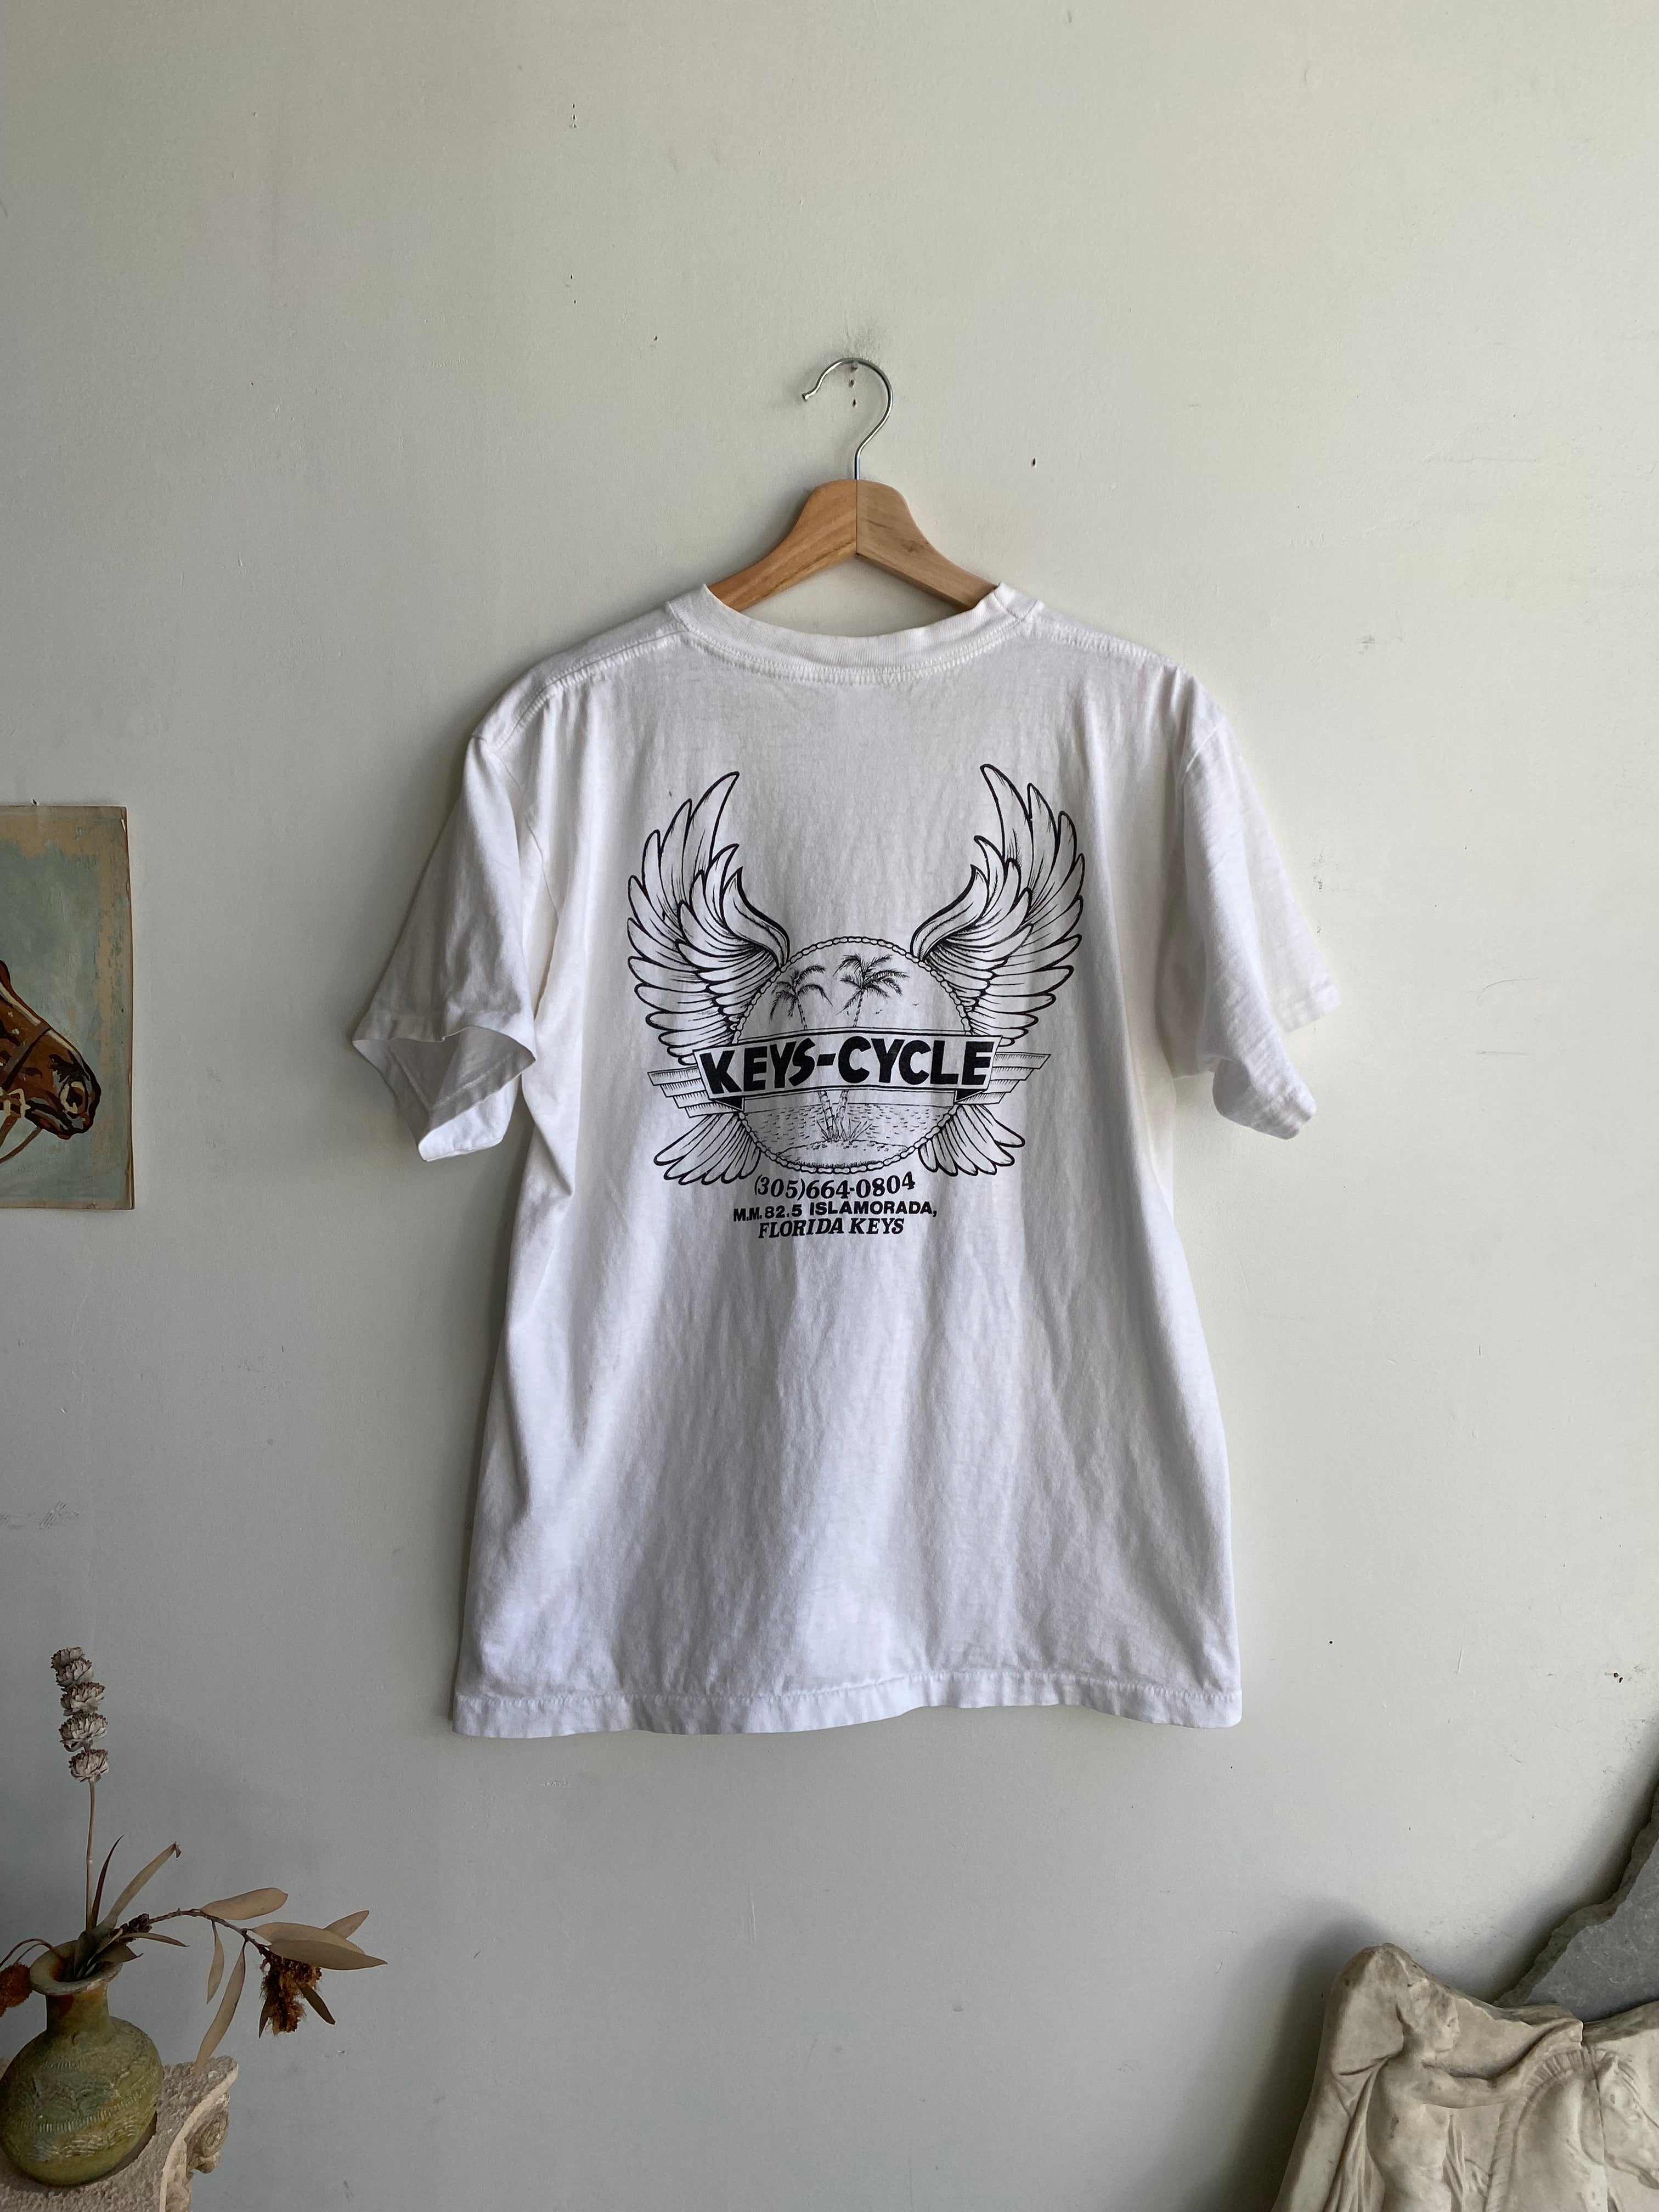 1990s Key Cycle T-Shirt (M)